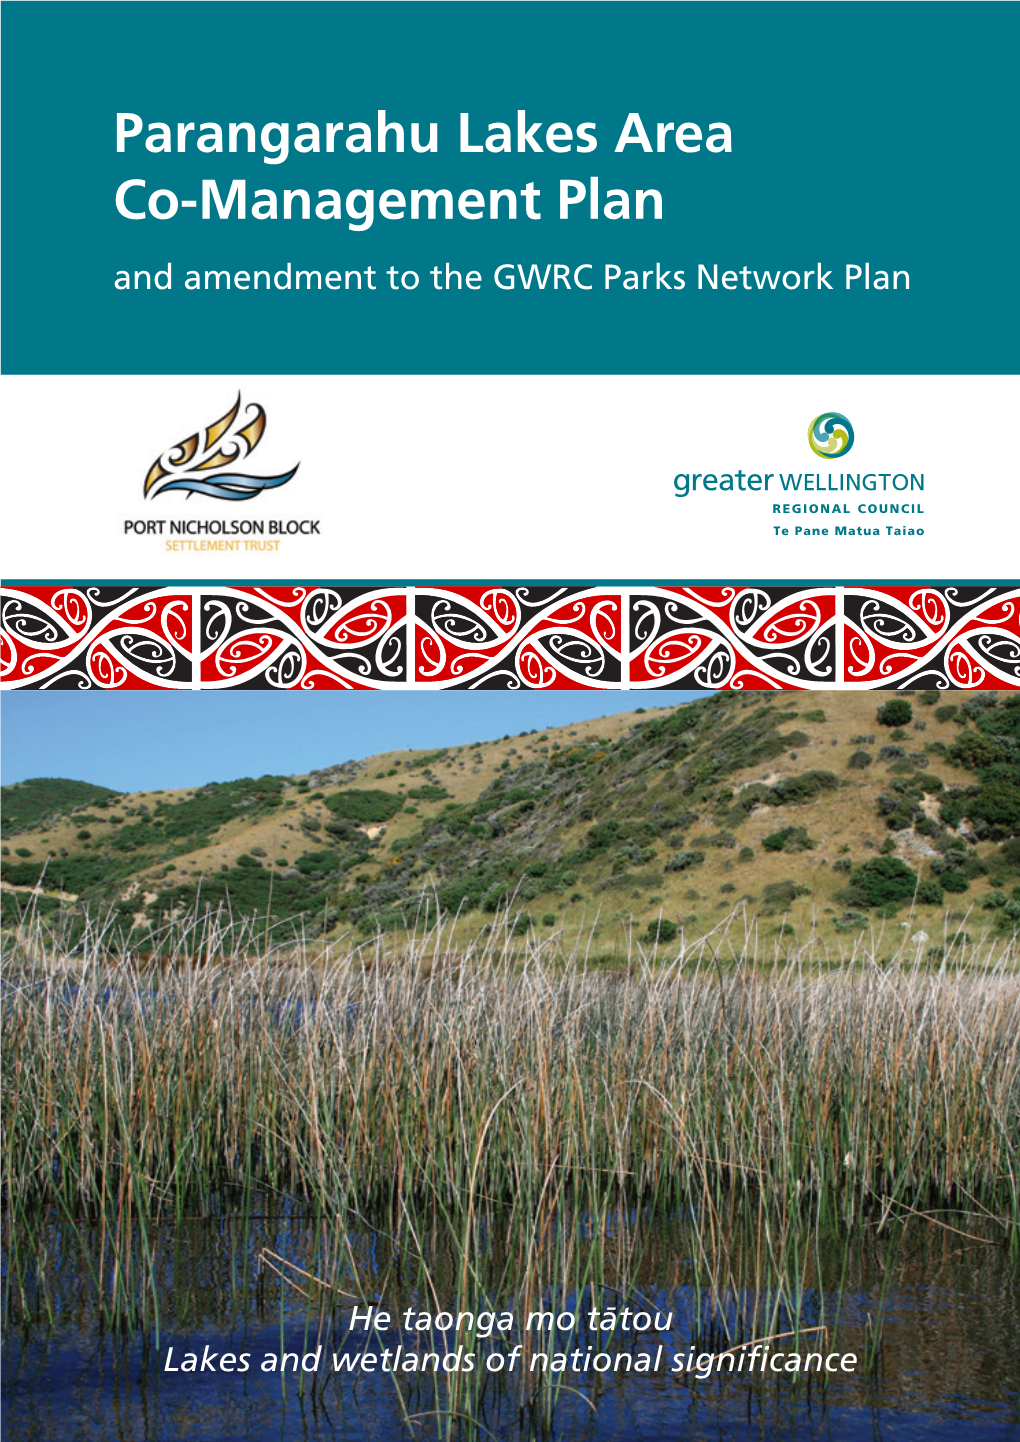 Parangarahu Lakes Area Co-Management Plan and Amendment to the GWRC Parks Network Plan